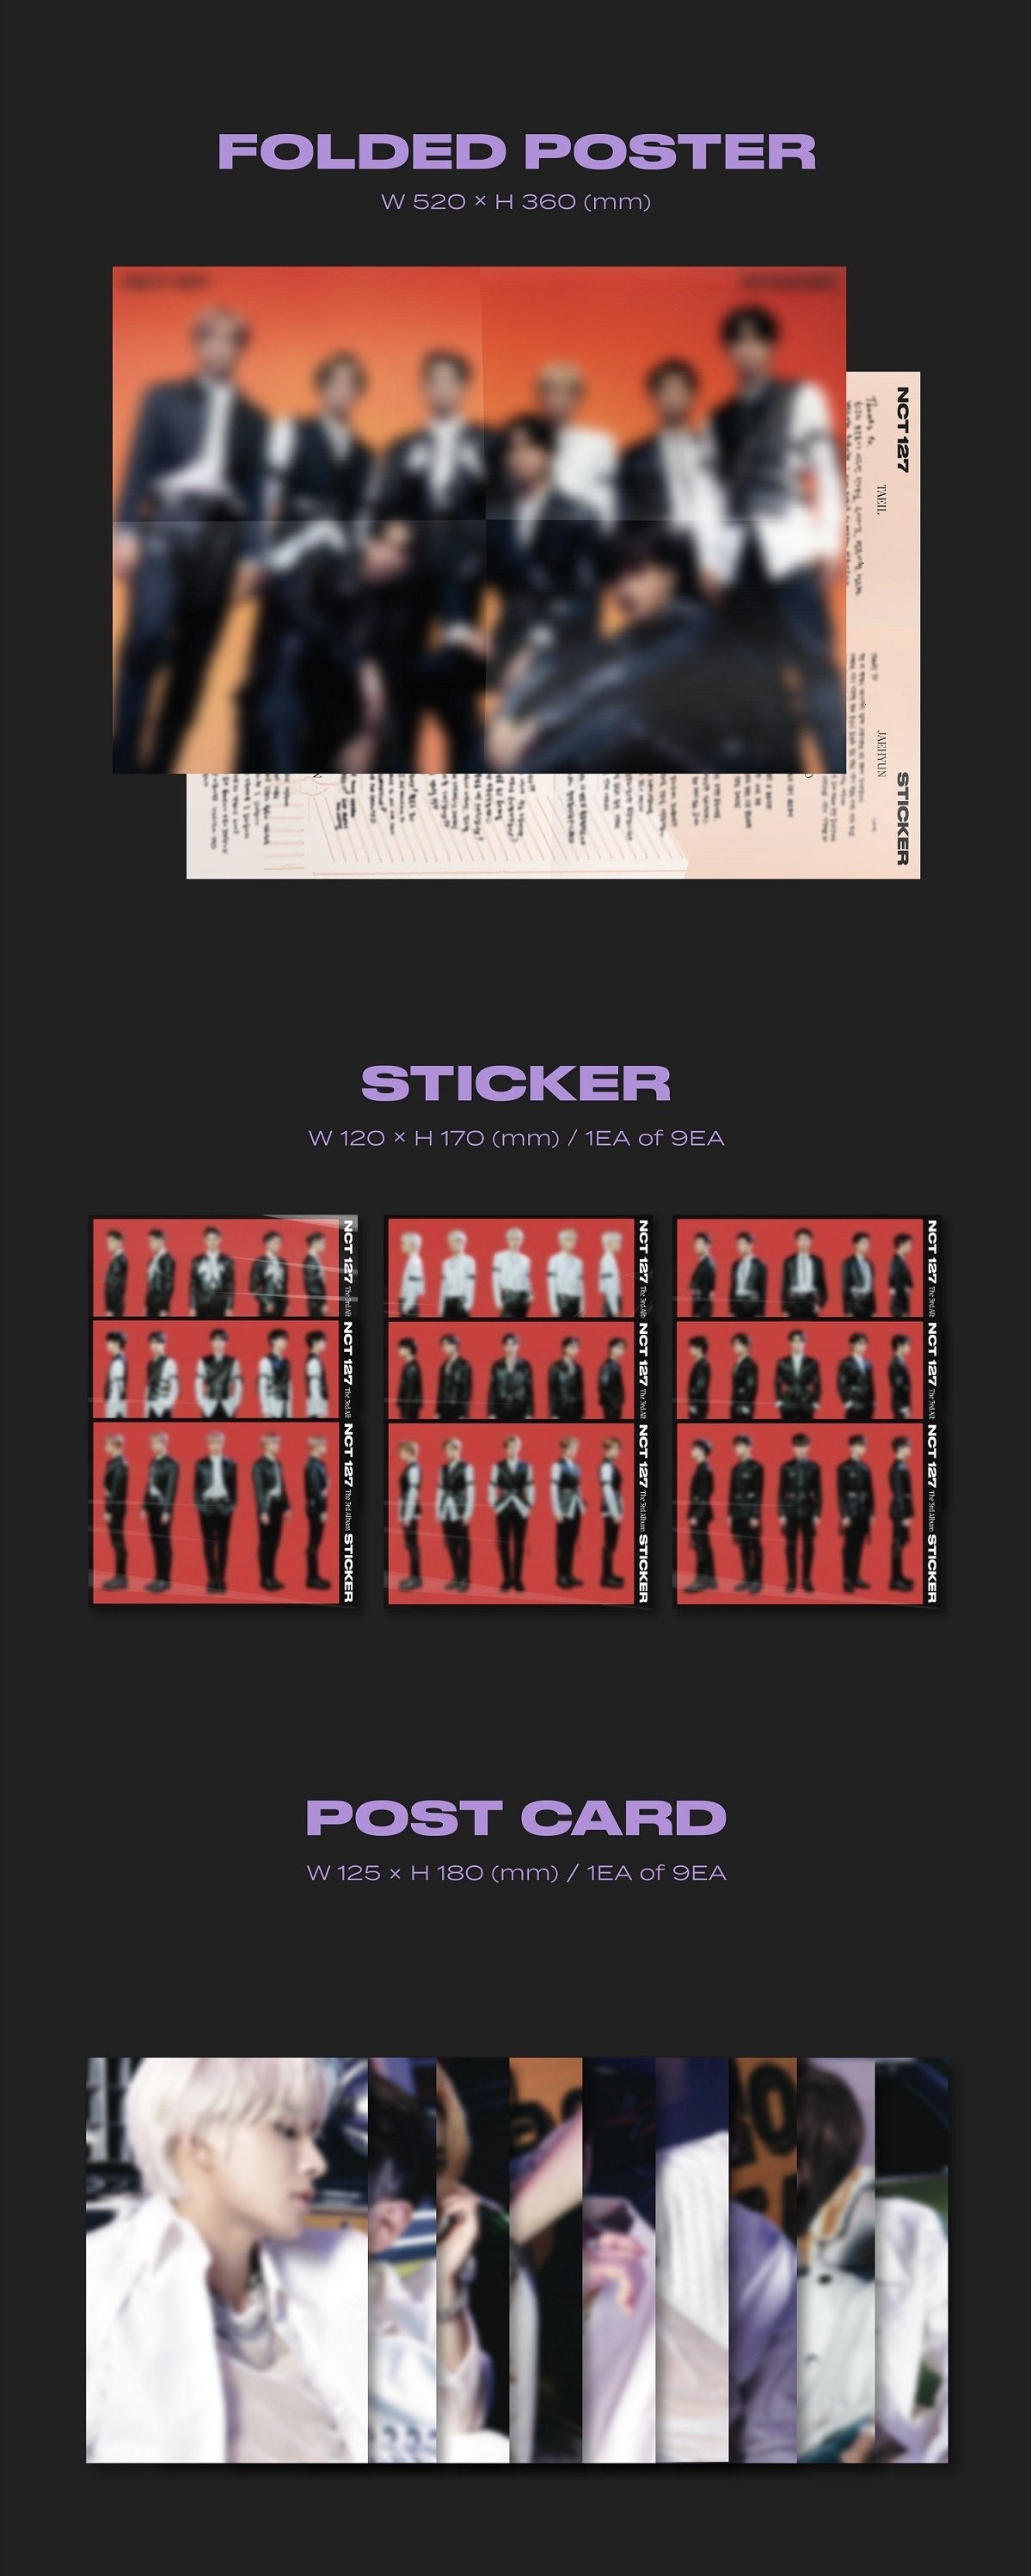 NCT 127  3RD FULL ALBUM [STICKER PHOTOBOOK (STICKER) VER.]